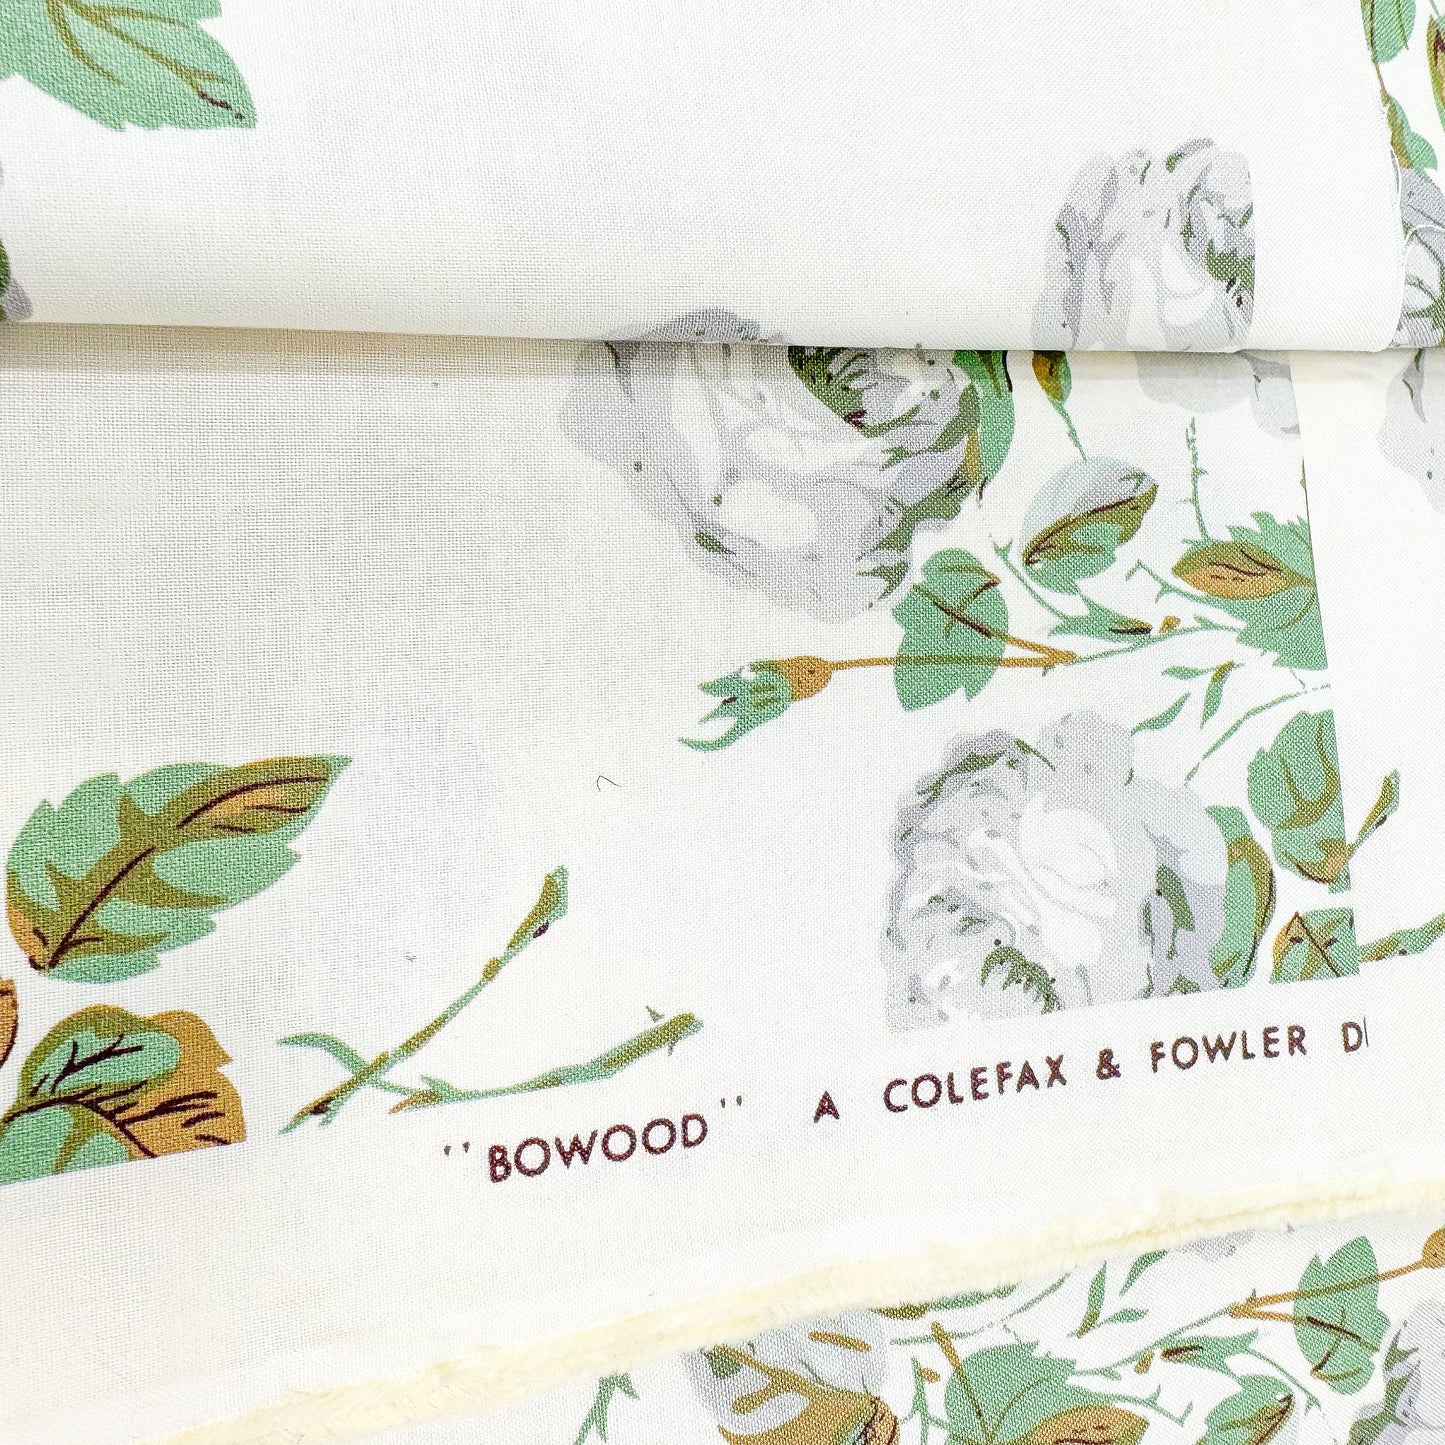 2 Yds. Bowood Colefax Fowler Chintz Cotton Fabric - Green / Grey